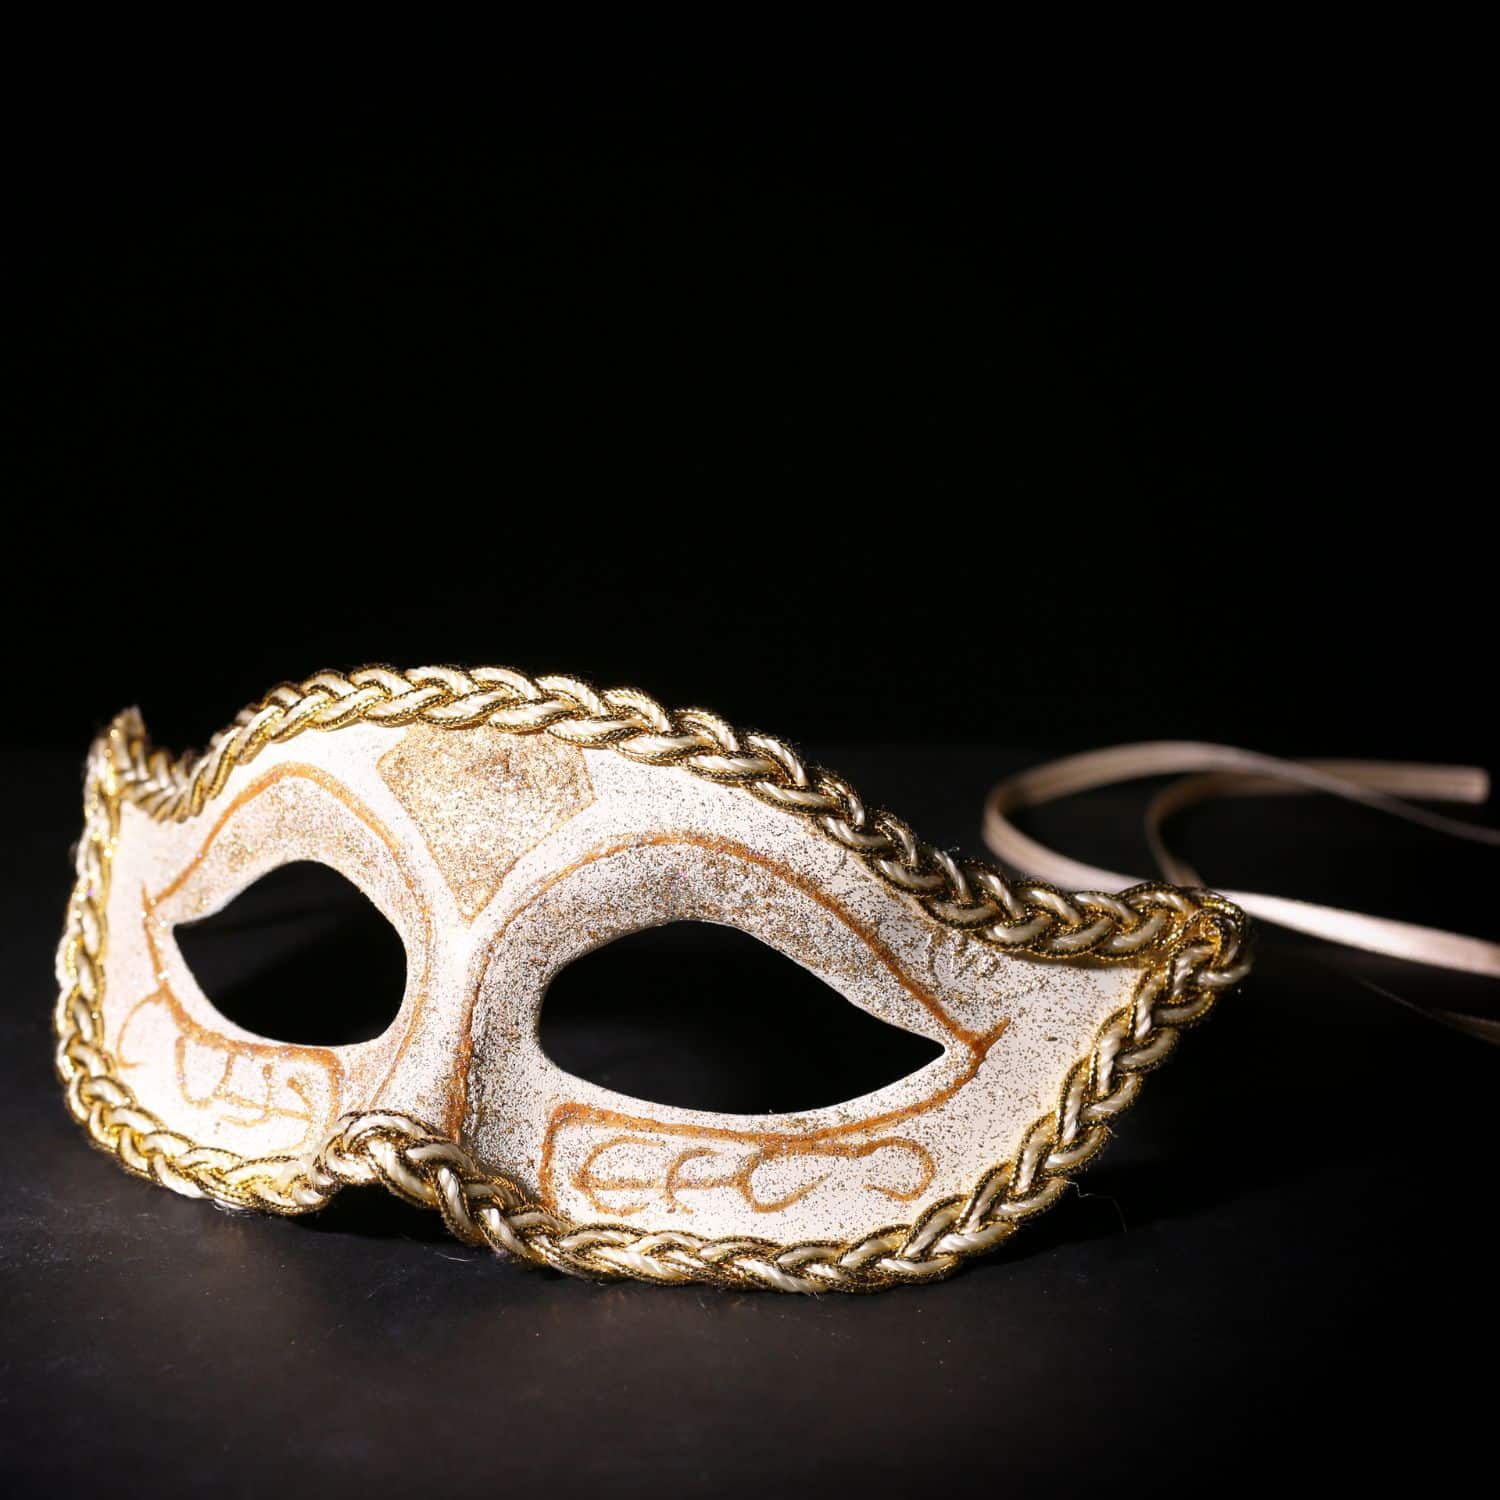 A cream & gold colored masquerade mask ona black background